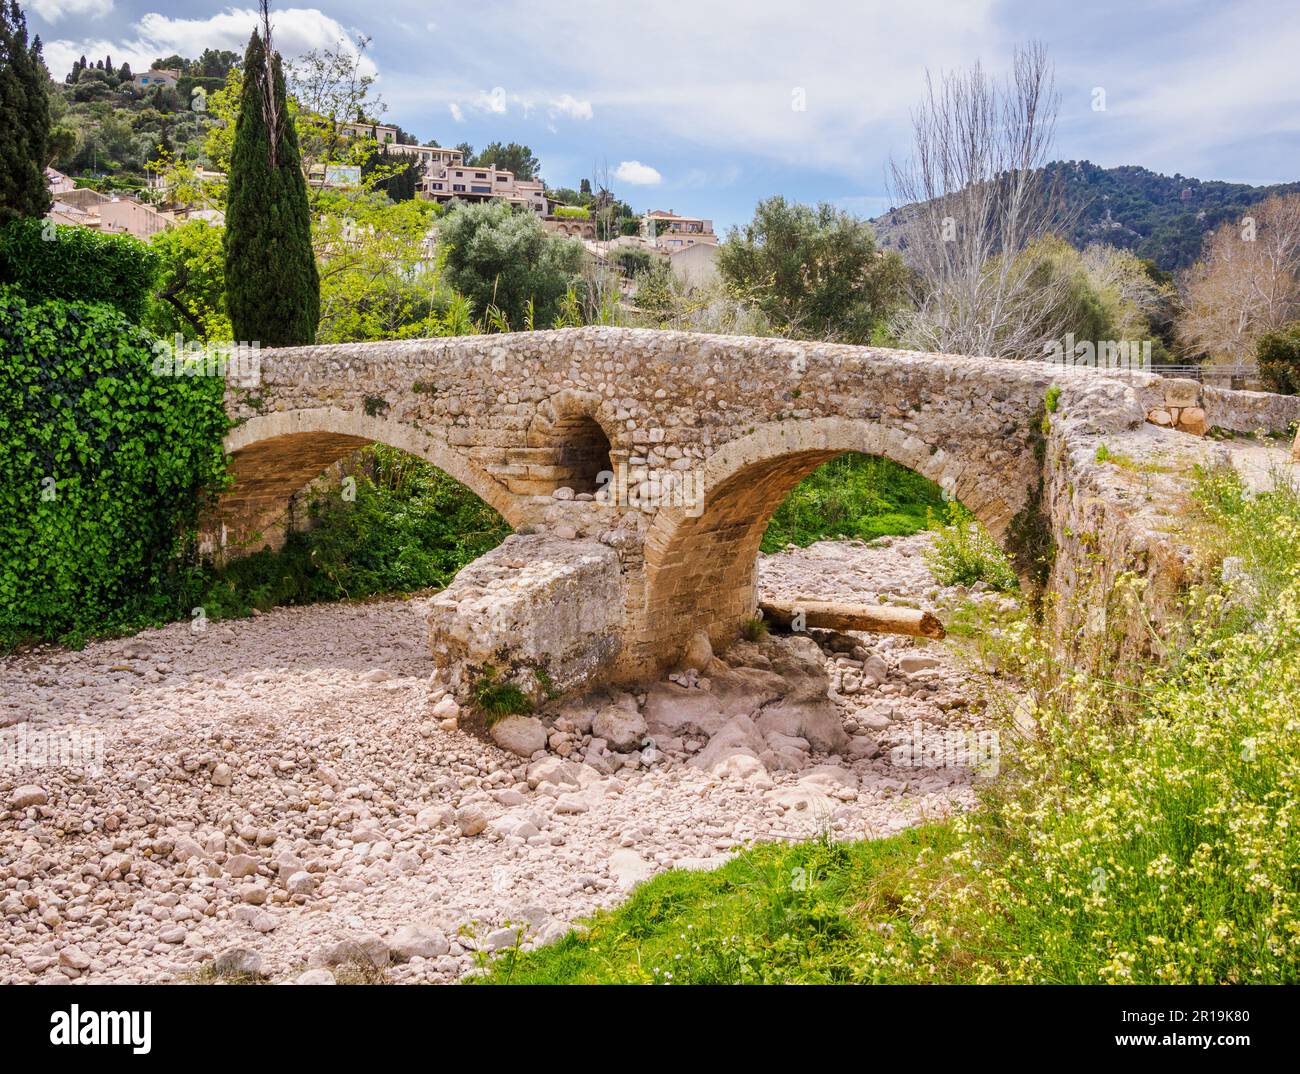 Pont Roma the Roman bridge over the dry Torrent de Sant Jordi through Pollenca in the Tramuntana Mountains of Majorca Spain Stock Photo